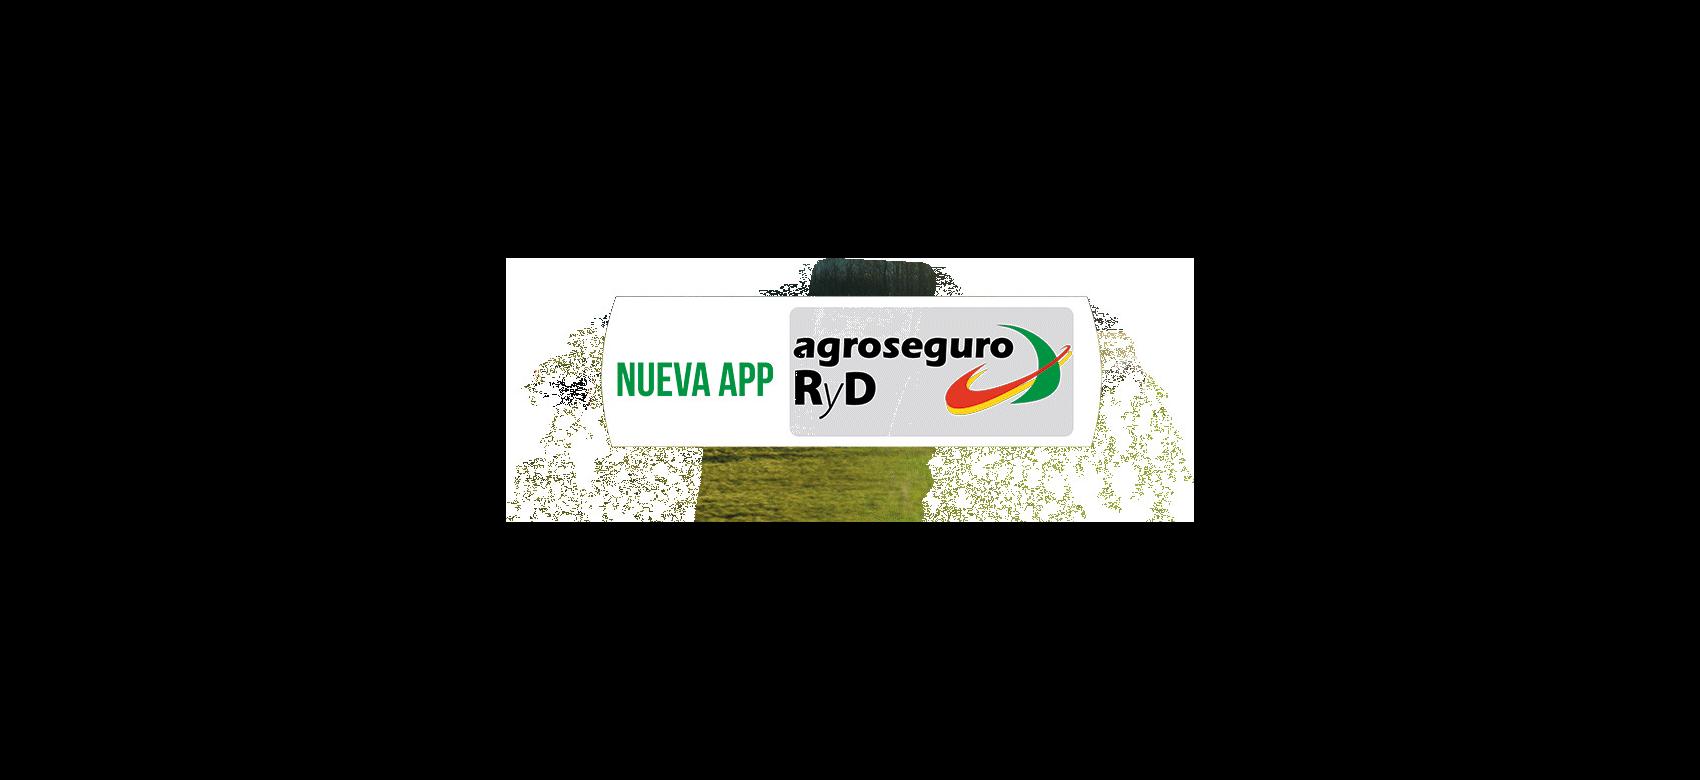 Texto""Nueva app AGROSEGURO RyD"